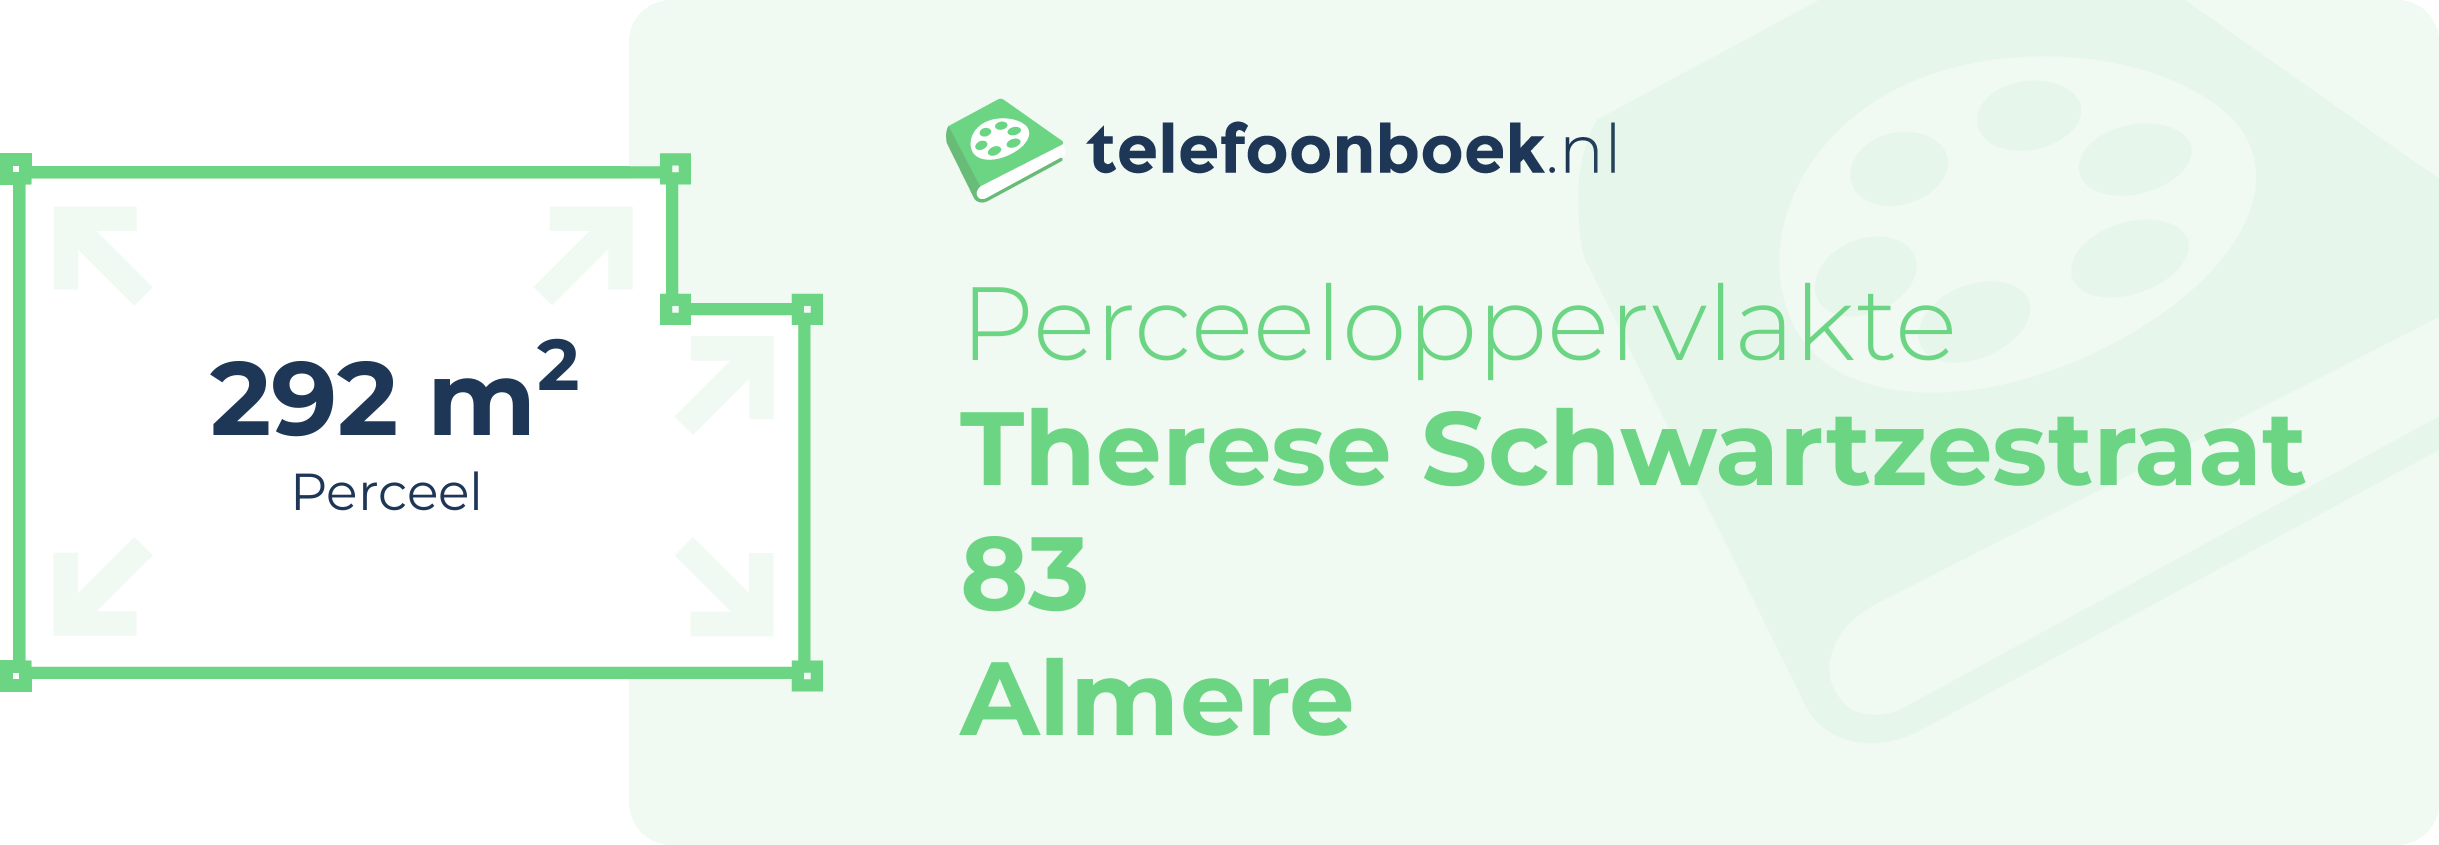 Perceeloppervlakte Therese Schwartzestraat 83 Almere